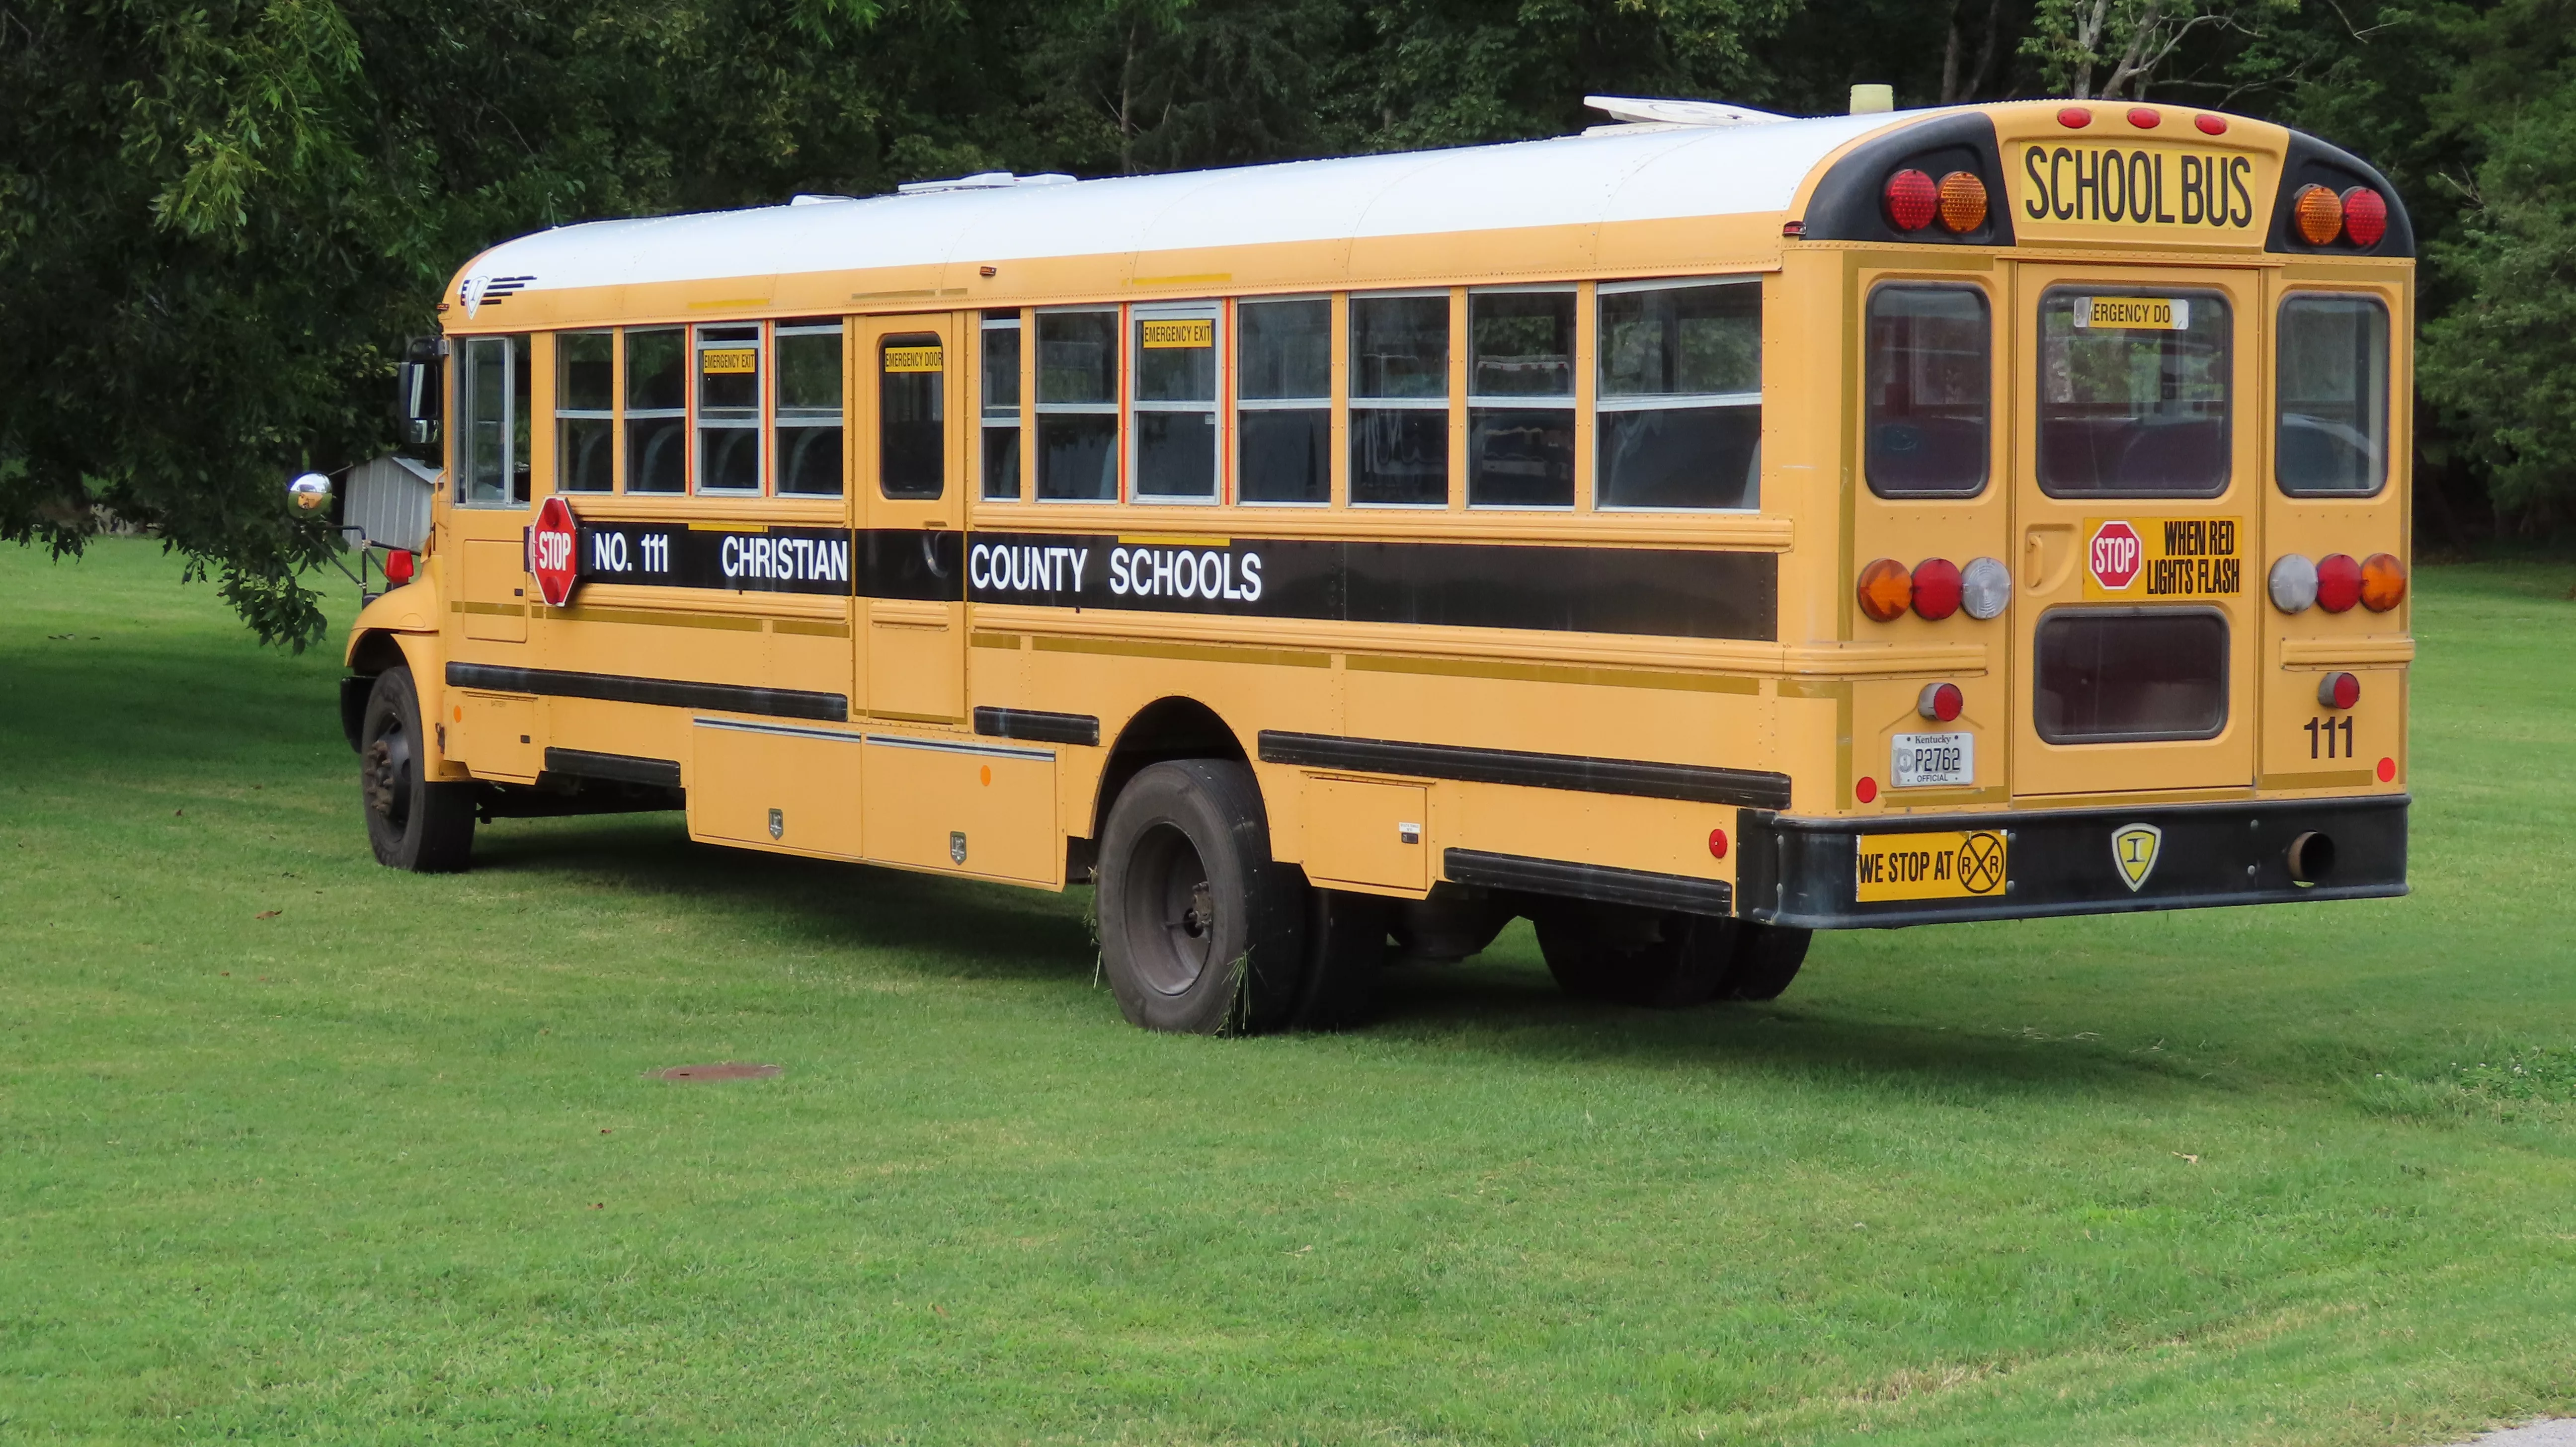 Only Minor Injuries In Christian County School Bus Crash | WKDZ Radio